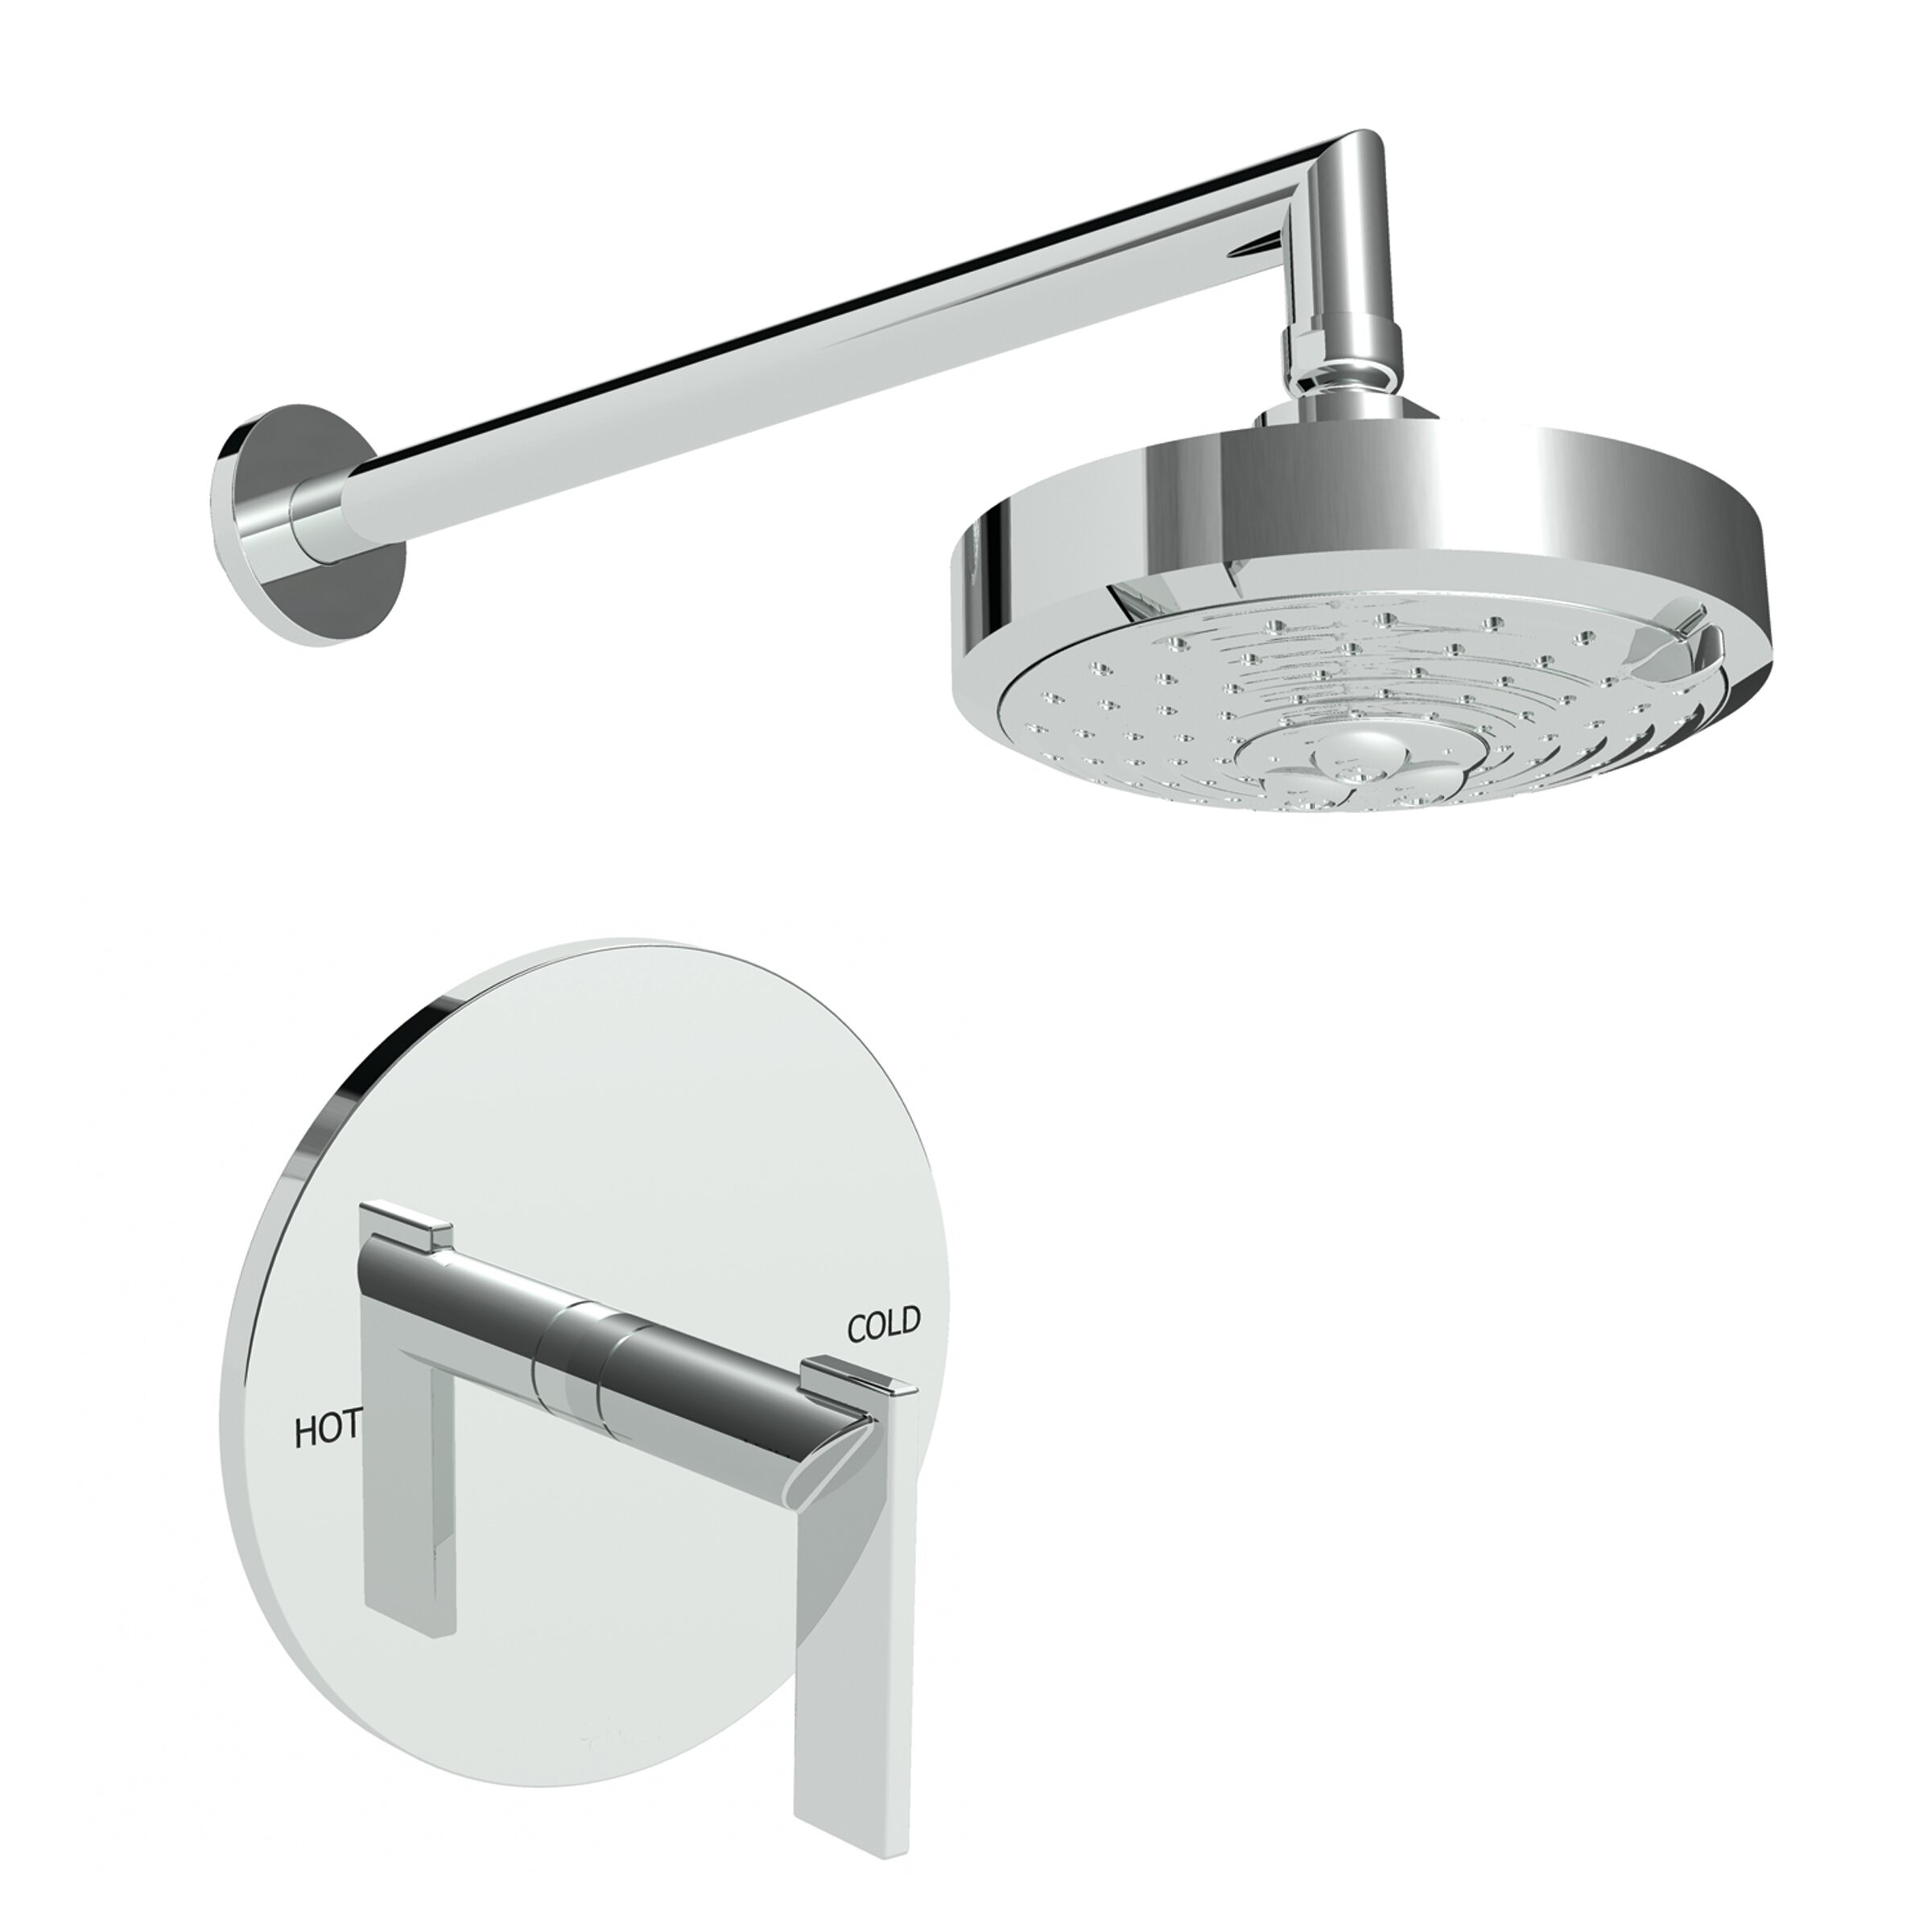 Newport Brass Faucets Bathroom Sink Faucets Keaton Brass Tones